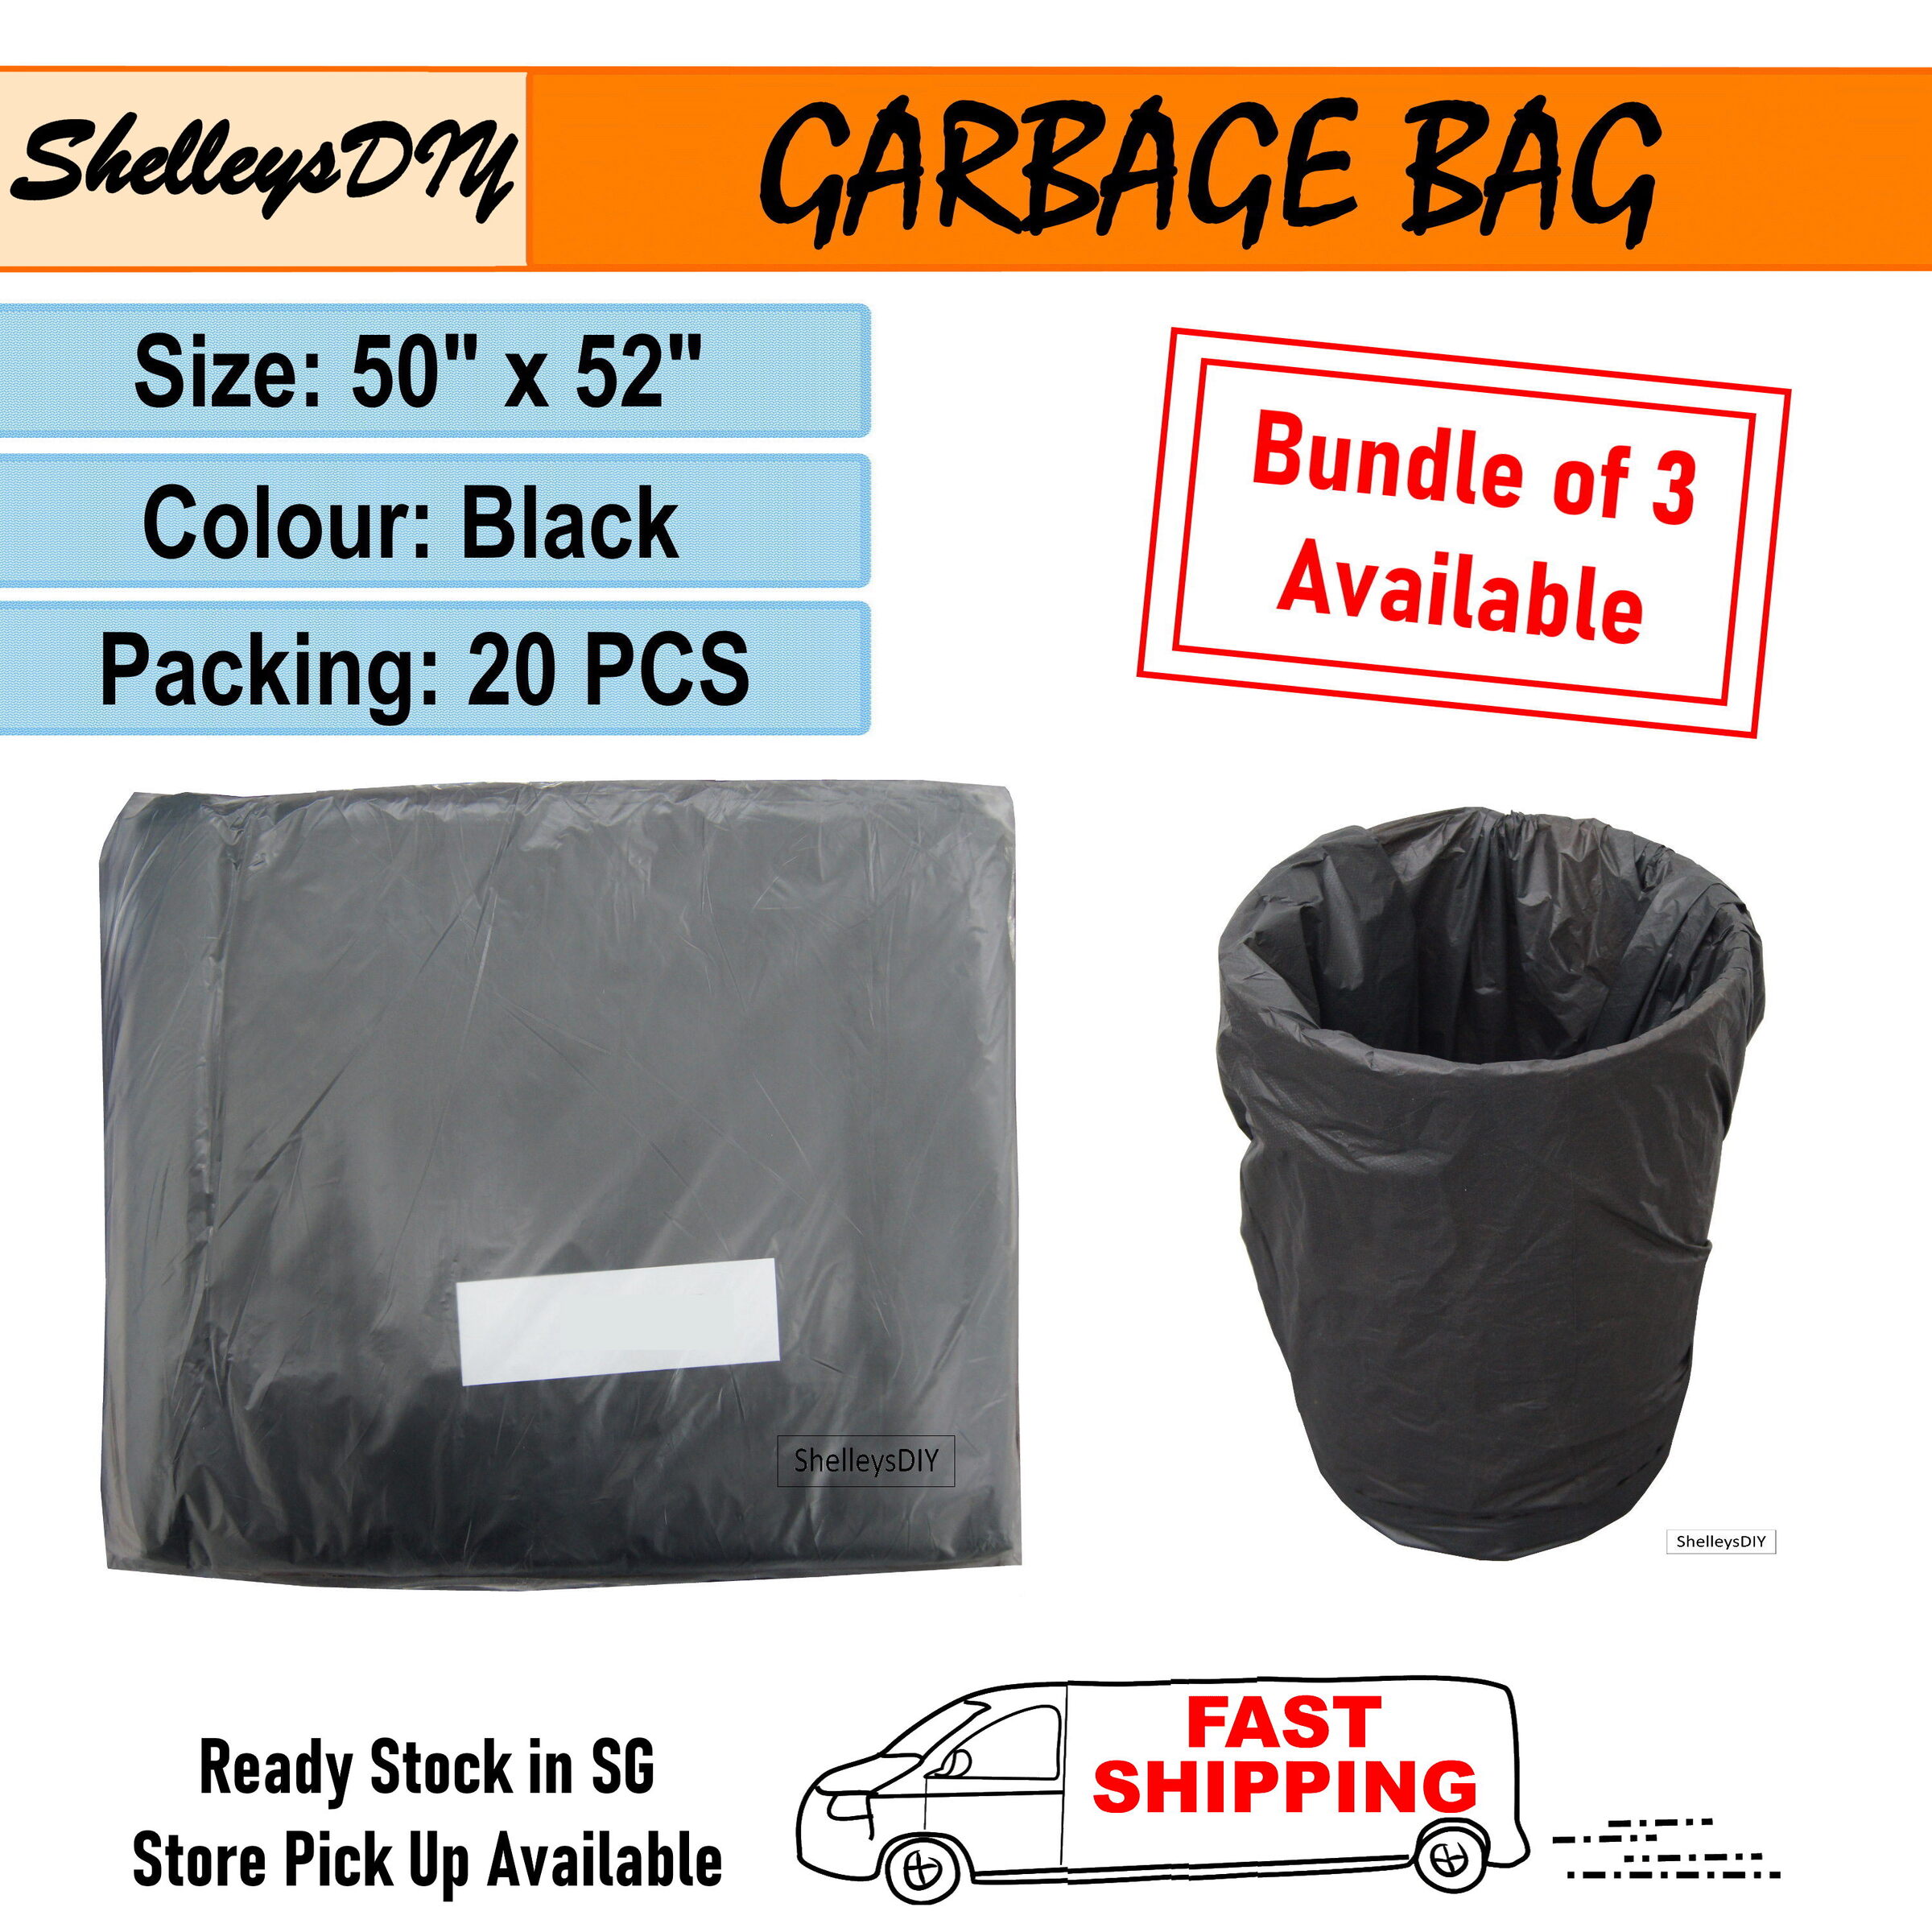 Tuffy Jumbo Garbage Bags - 38 x 50 - Black in Garbage Bags from Simplex  Trading